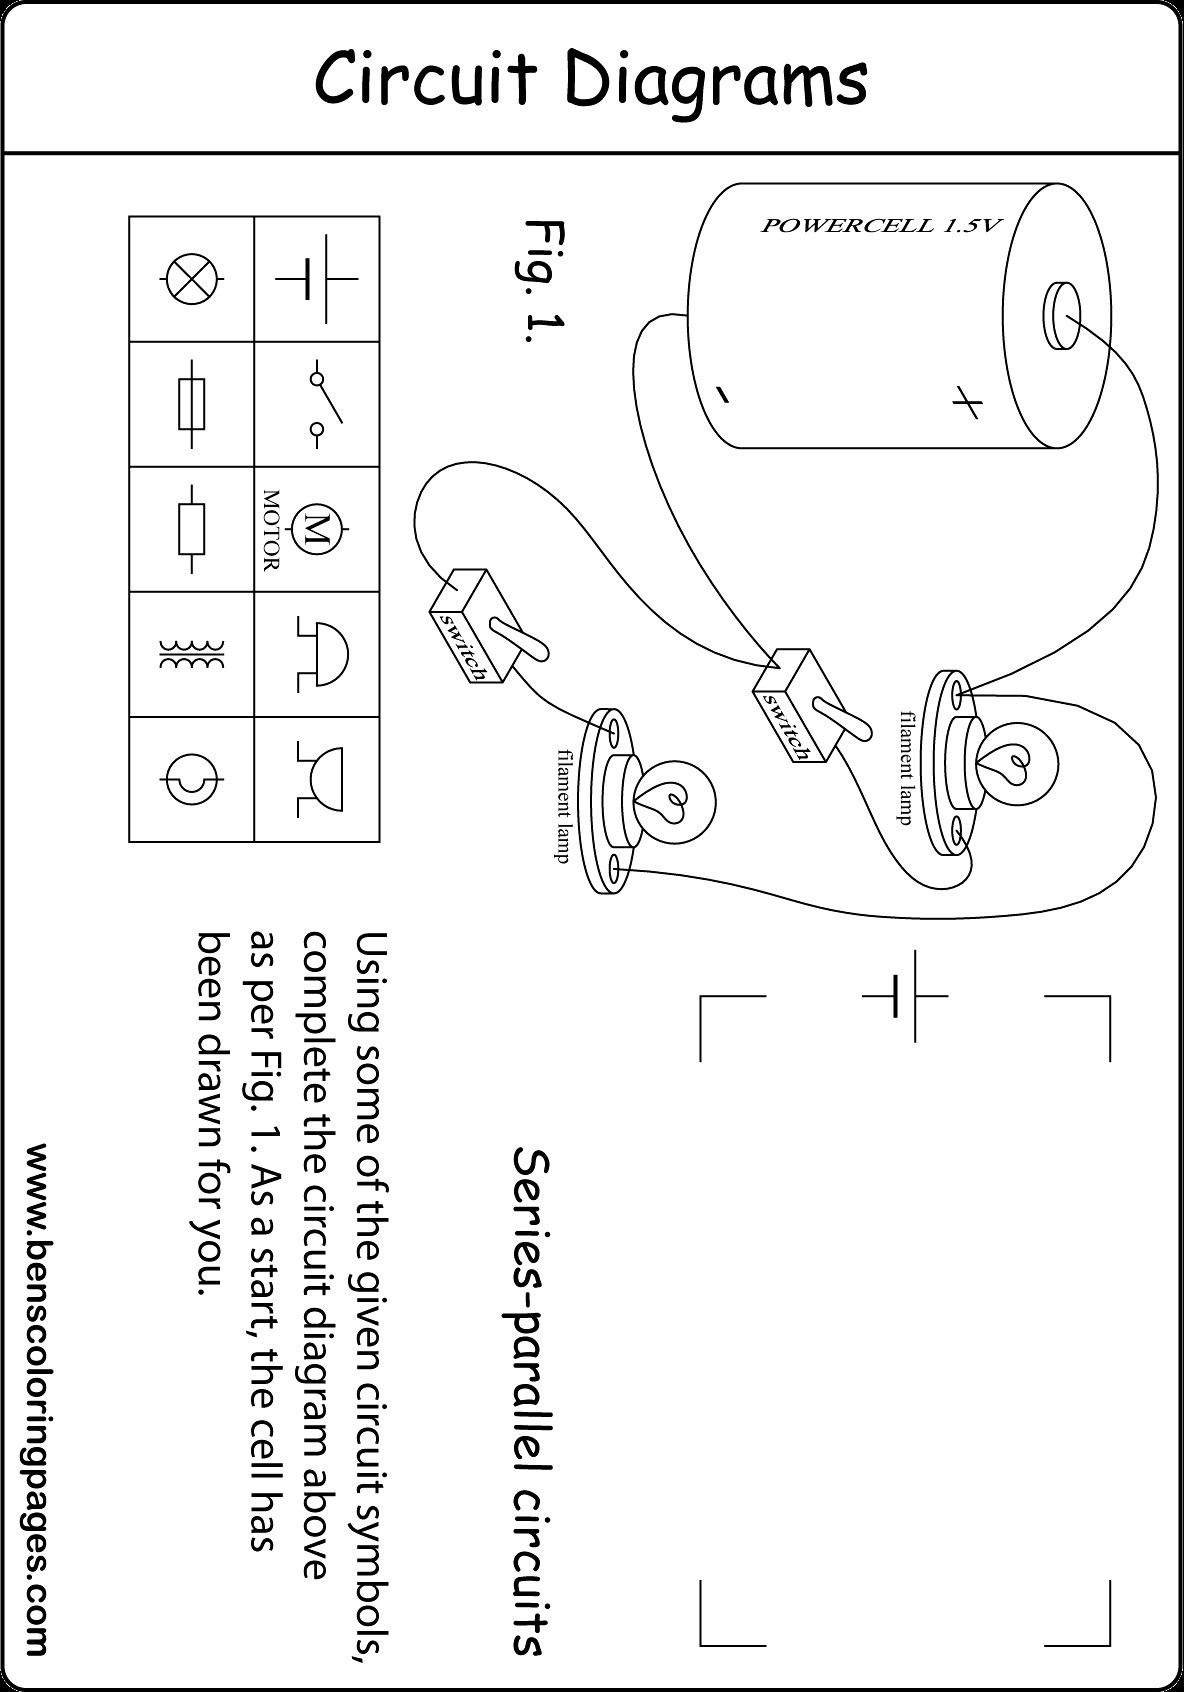 ponent Series And Parallel Circuits Diagrams Circuit Diagram Task Circ Full Size generator schematic symbol